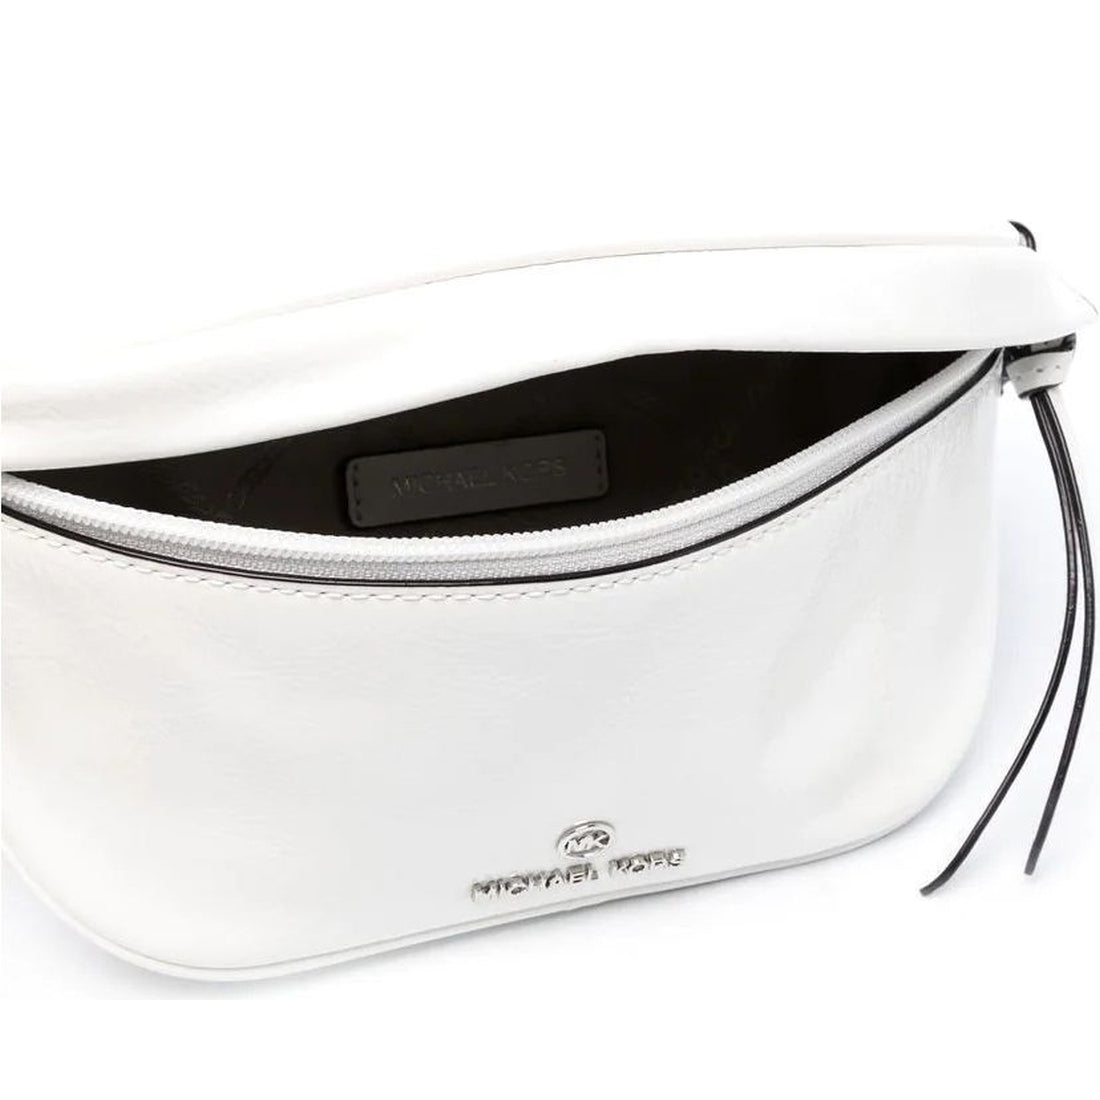 Michael Kors womens optic white xs sling messenger bag | Vilbury London